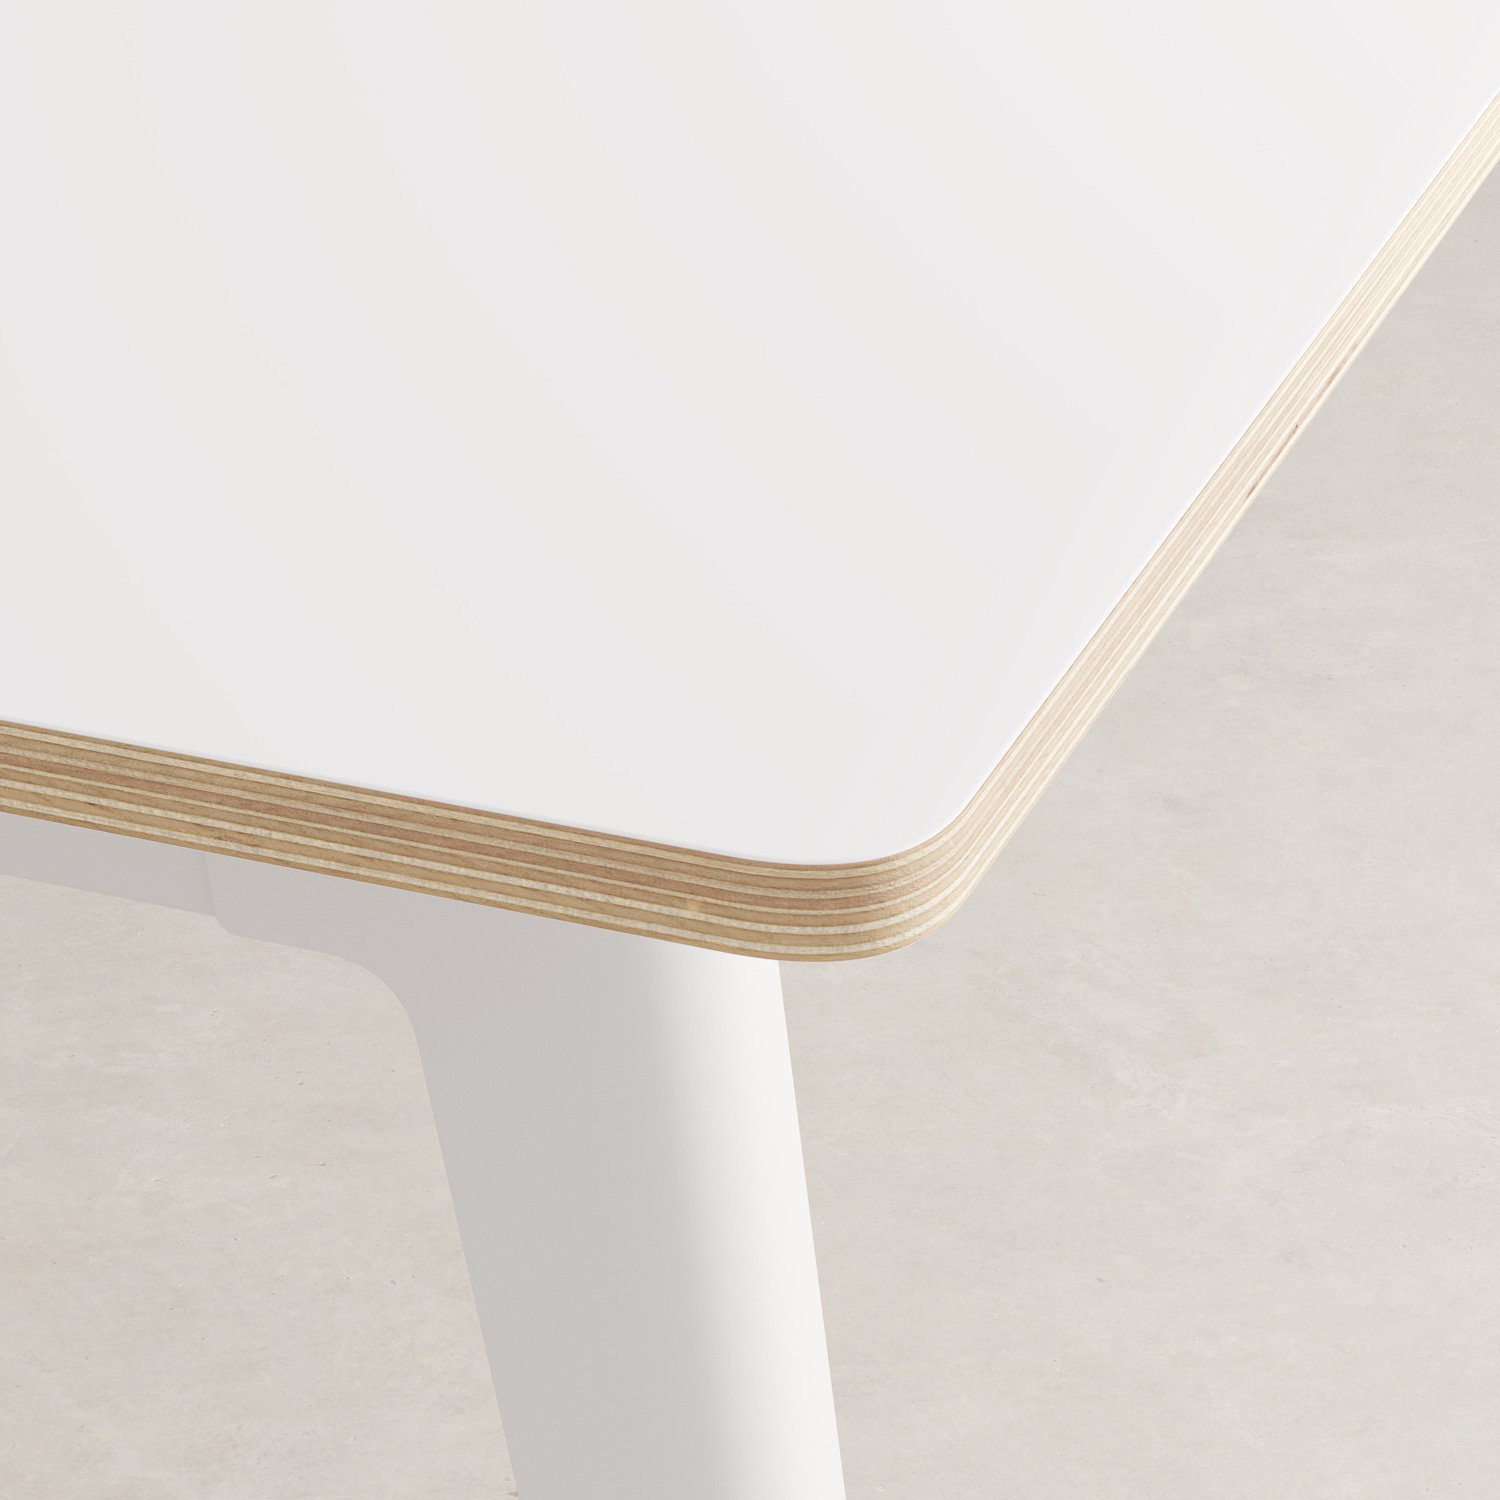 NEW MODERN 4–seater workbench – white plywood